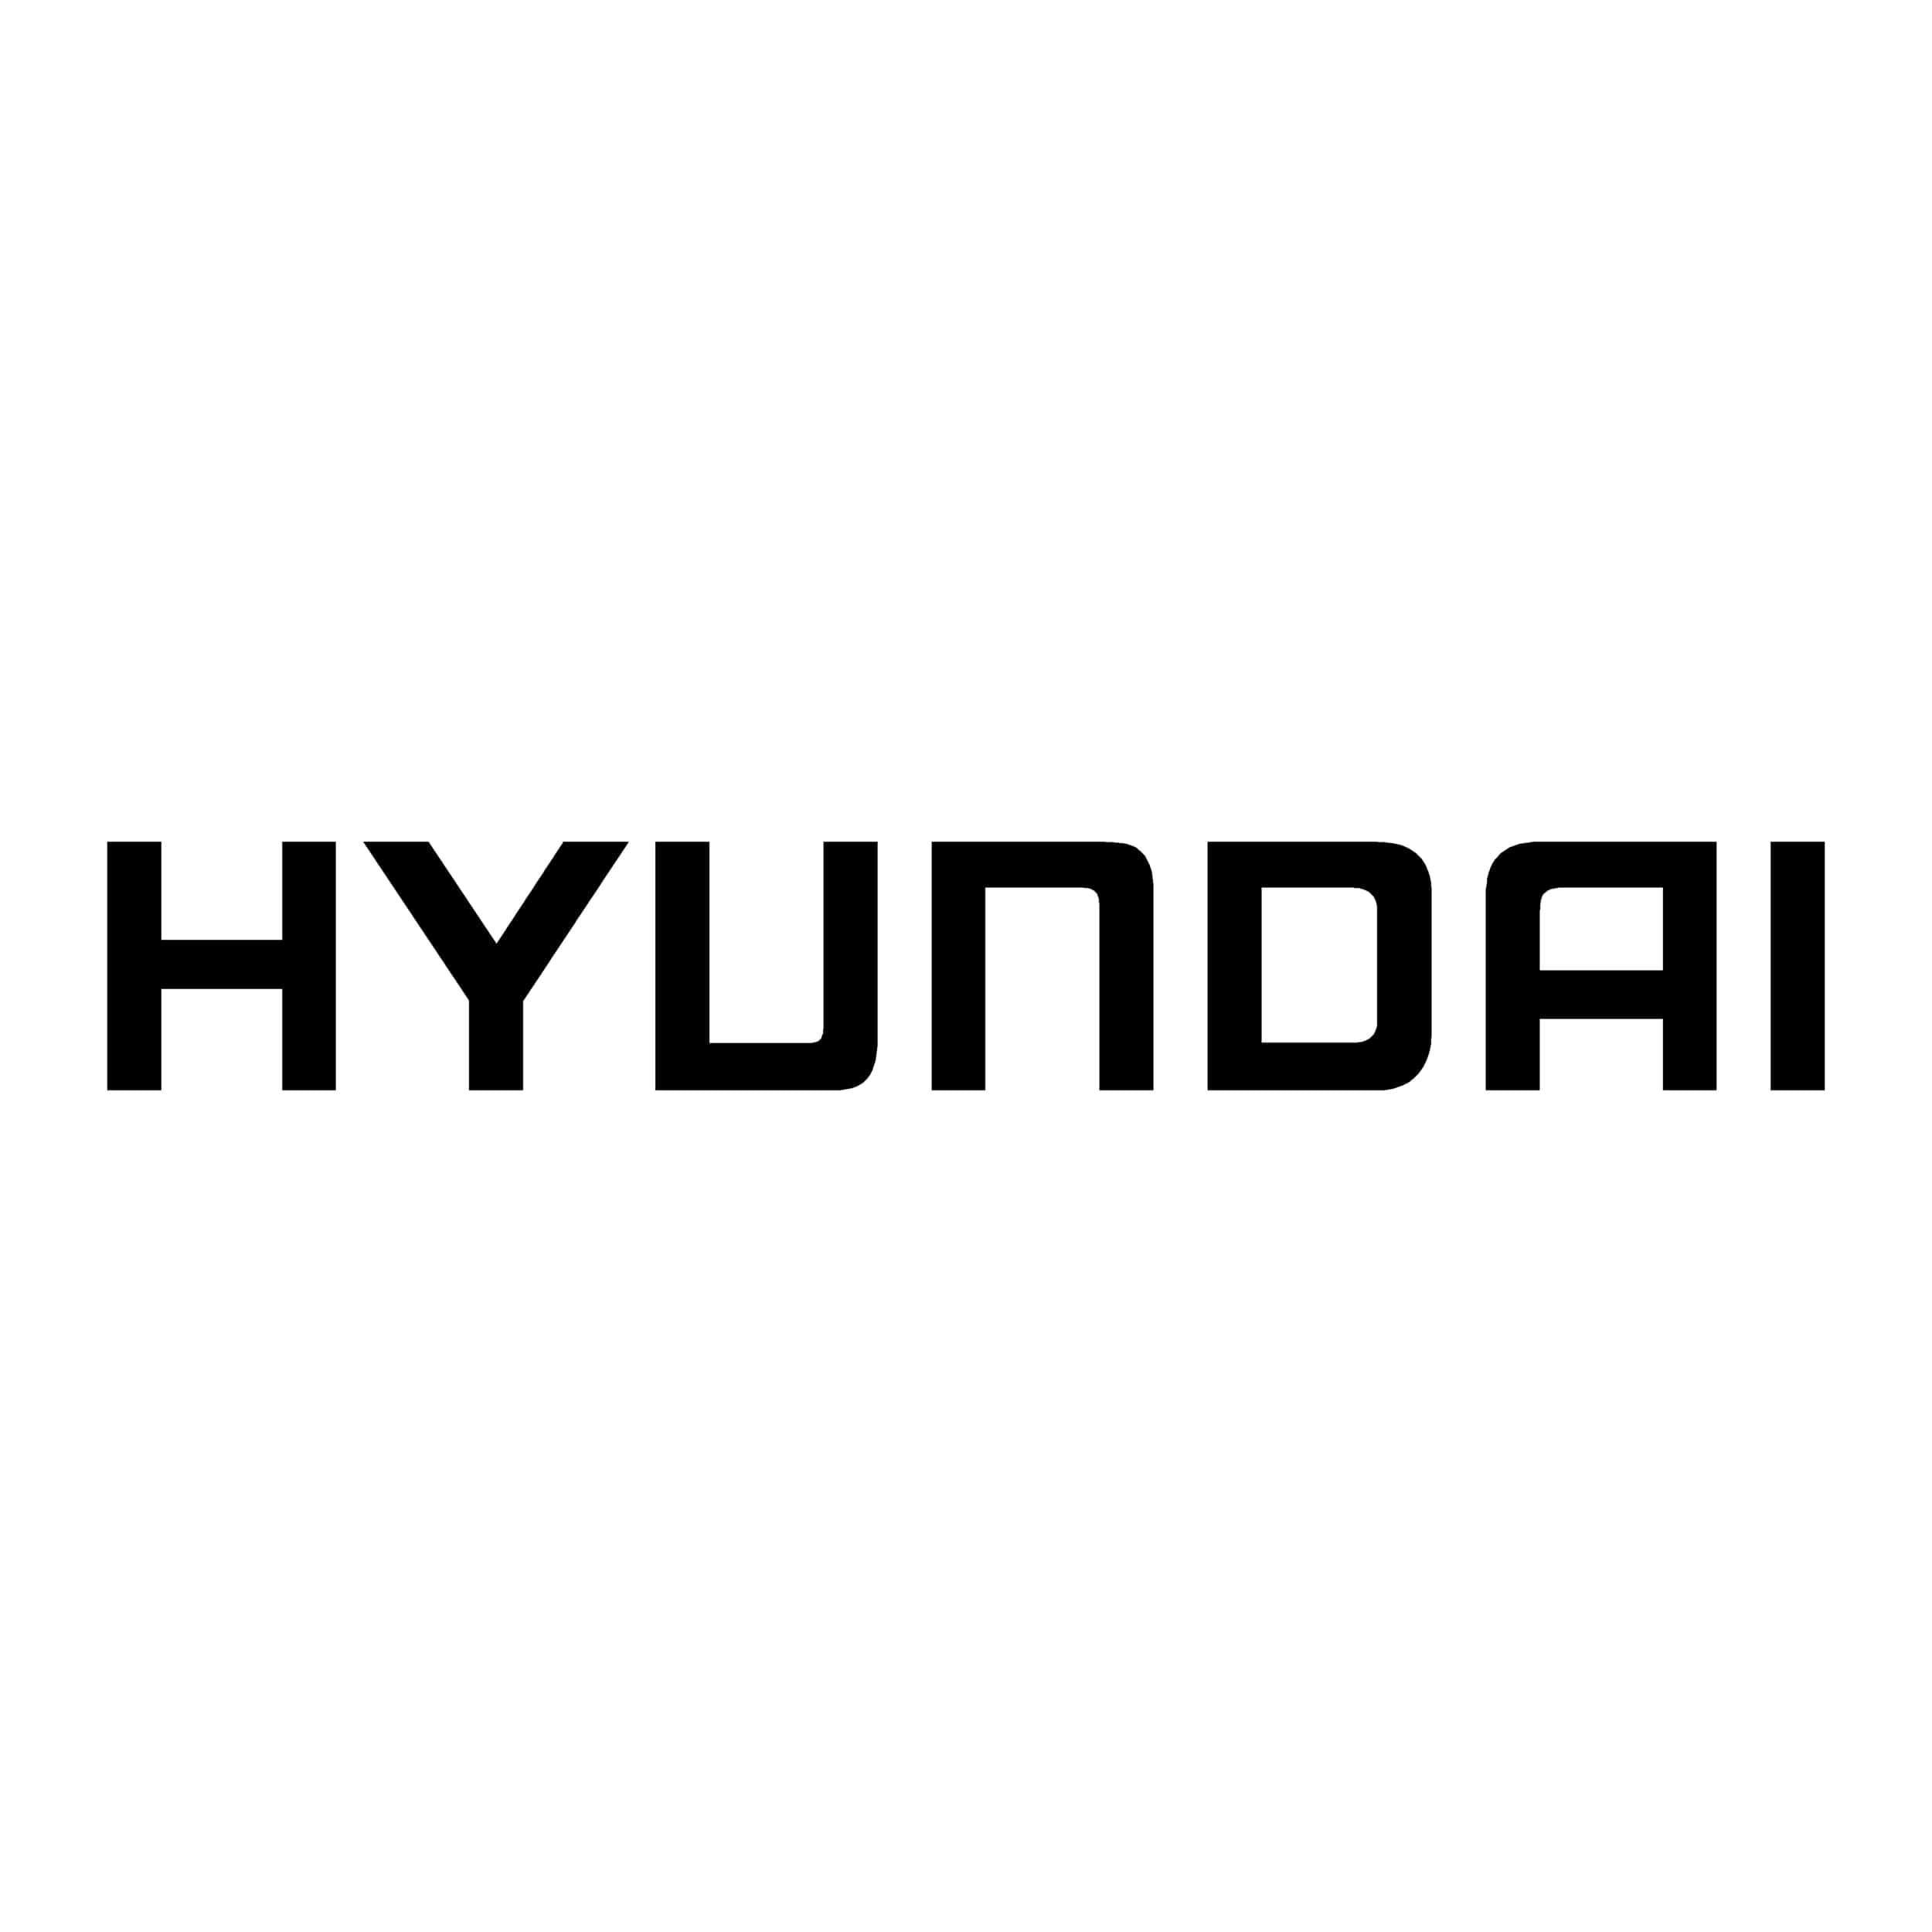 stickers-hyundai-ref-1-auto-tuning-amortisseur-4x4-tout-terrain-auto-camion-competition-rallye-autocollant-min